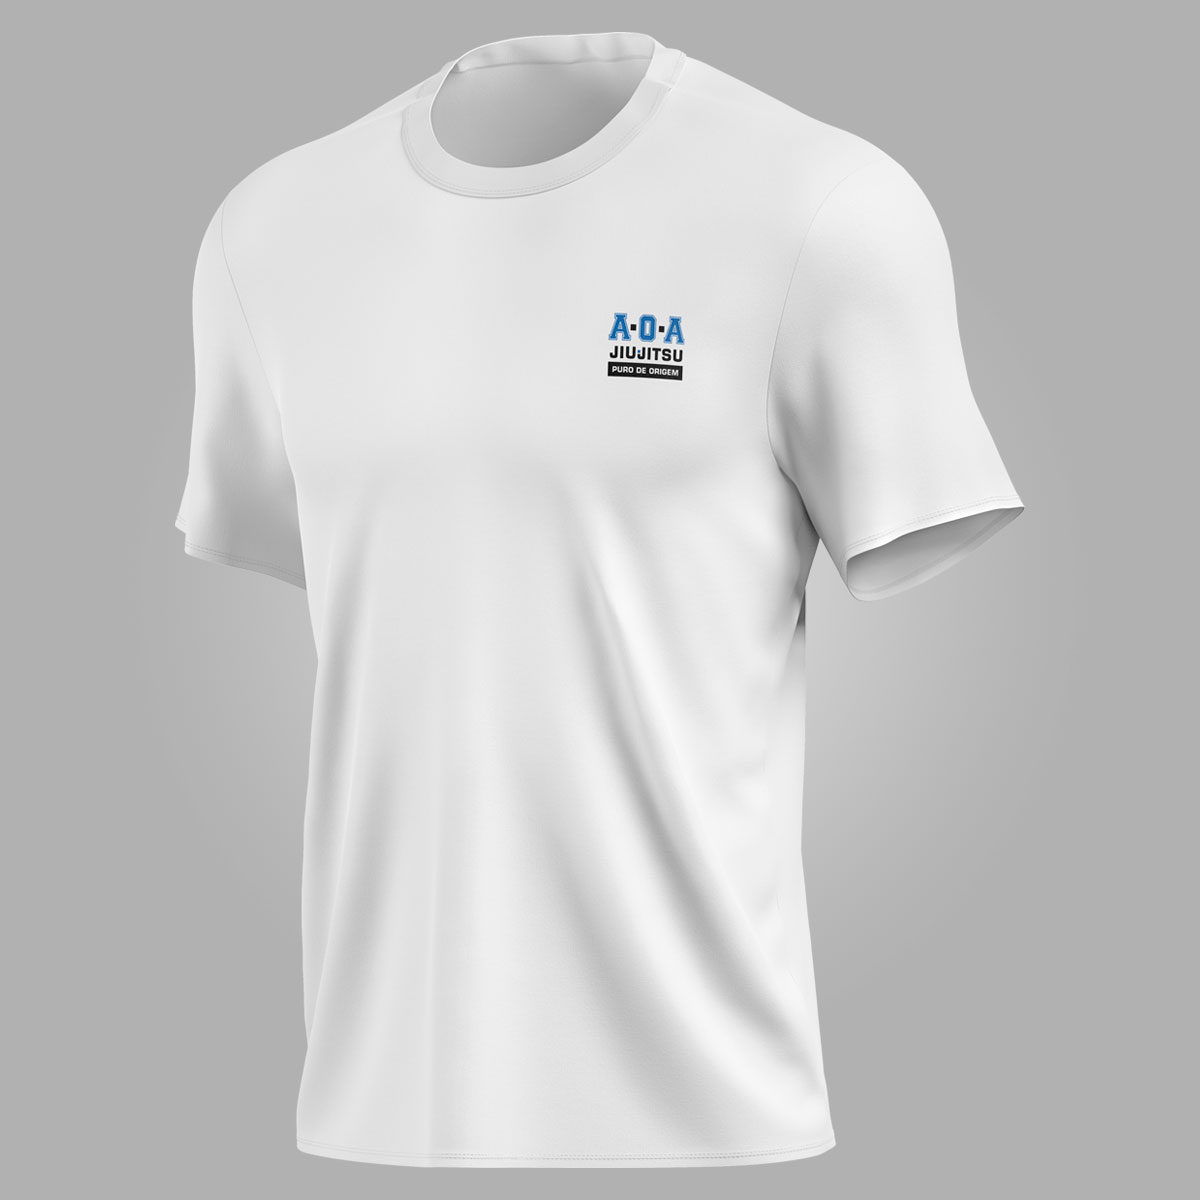 Camiseta Primeiro Grupo De Defesa Aérea - Cor Branca